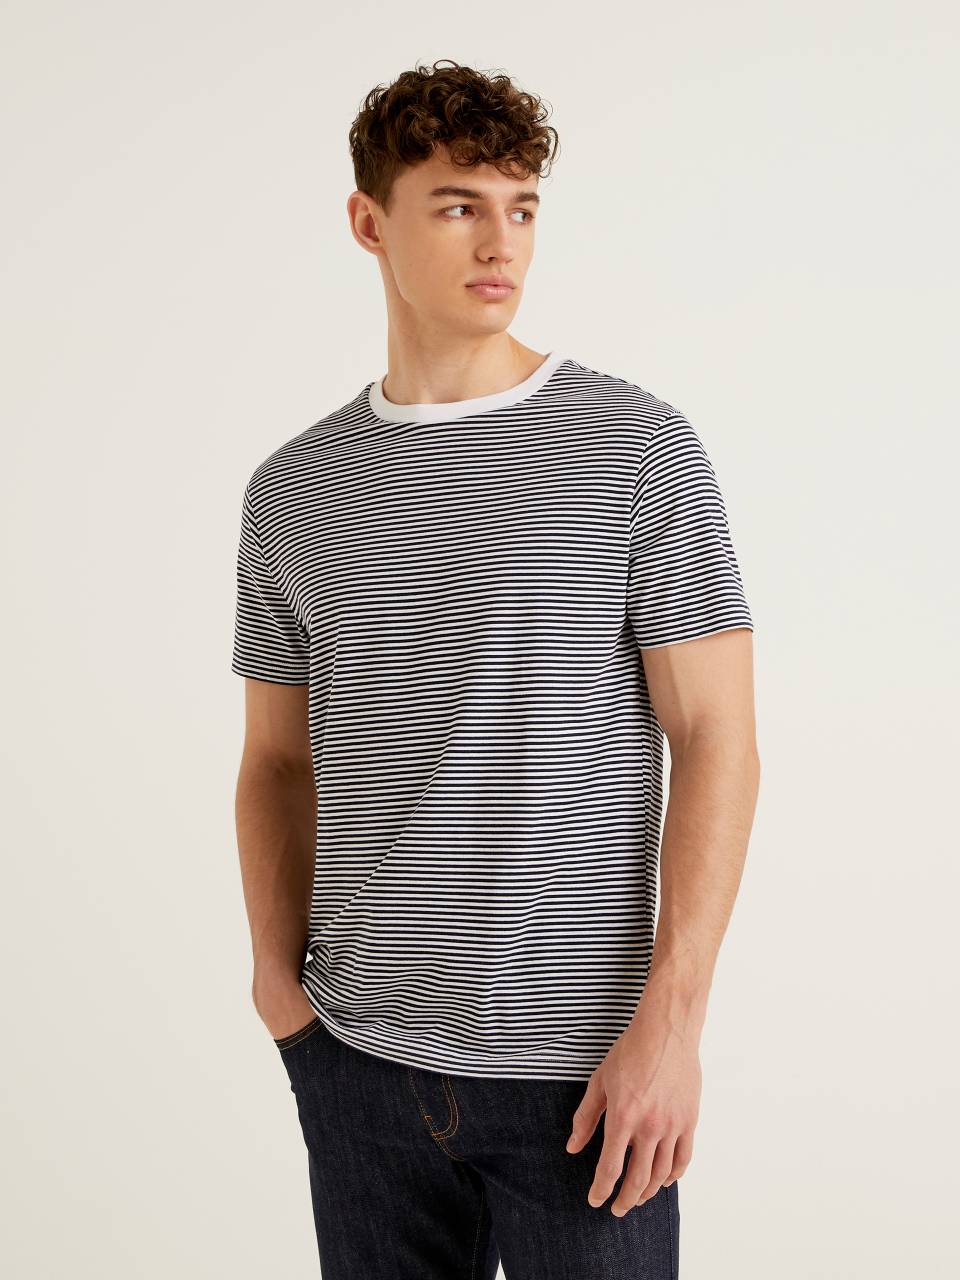 Benetton Striped t-shirt in 100% cotton. 1